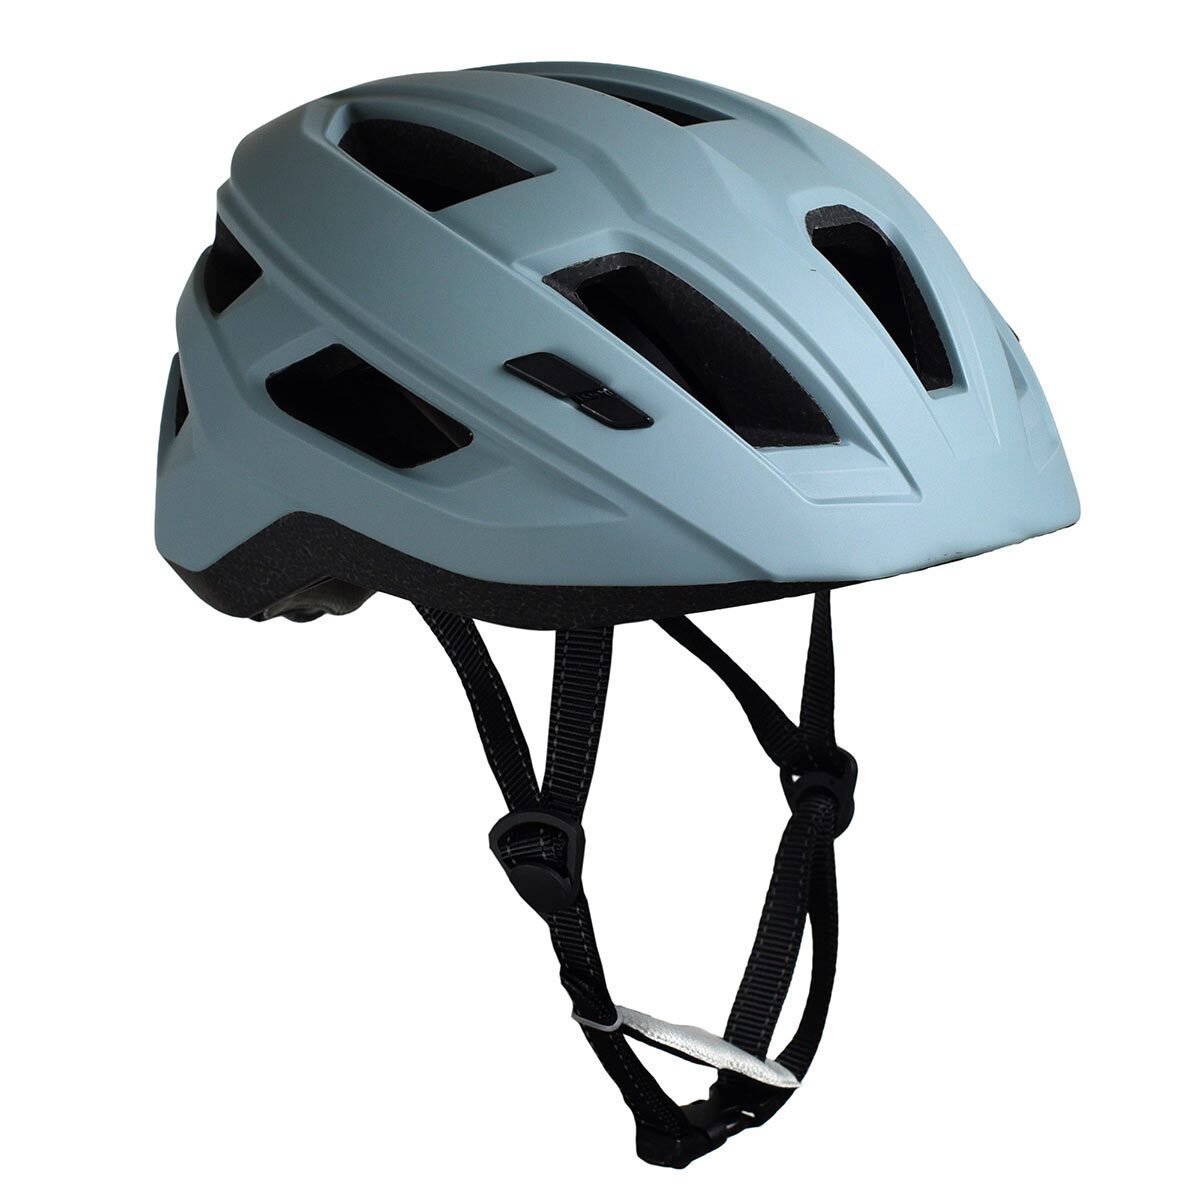 Freetown Bike Helmet in 3 Colours - Signature Retail Stores